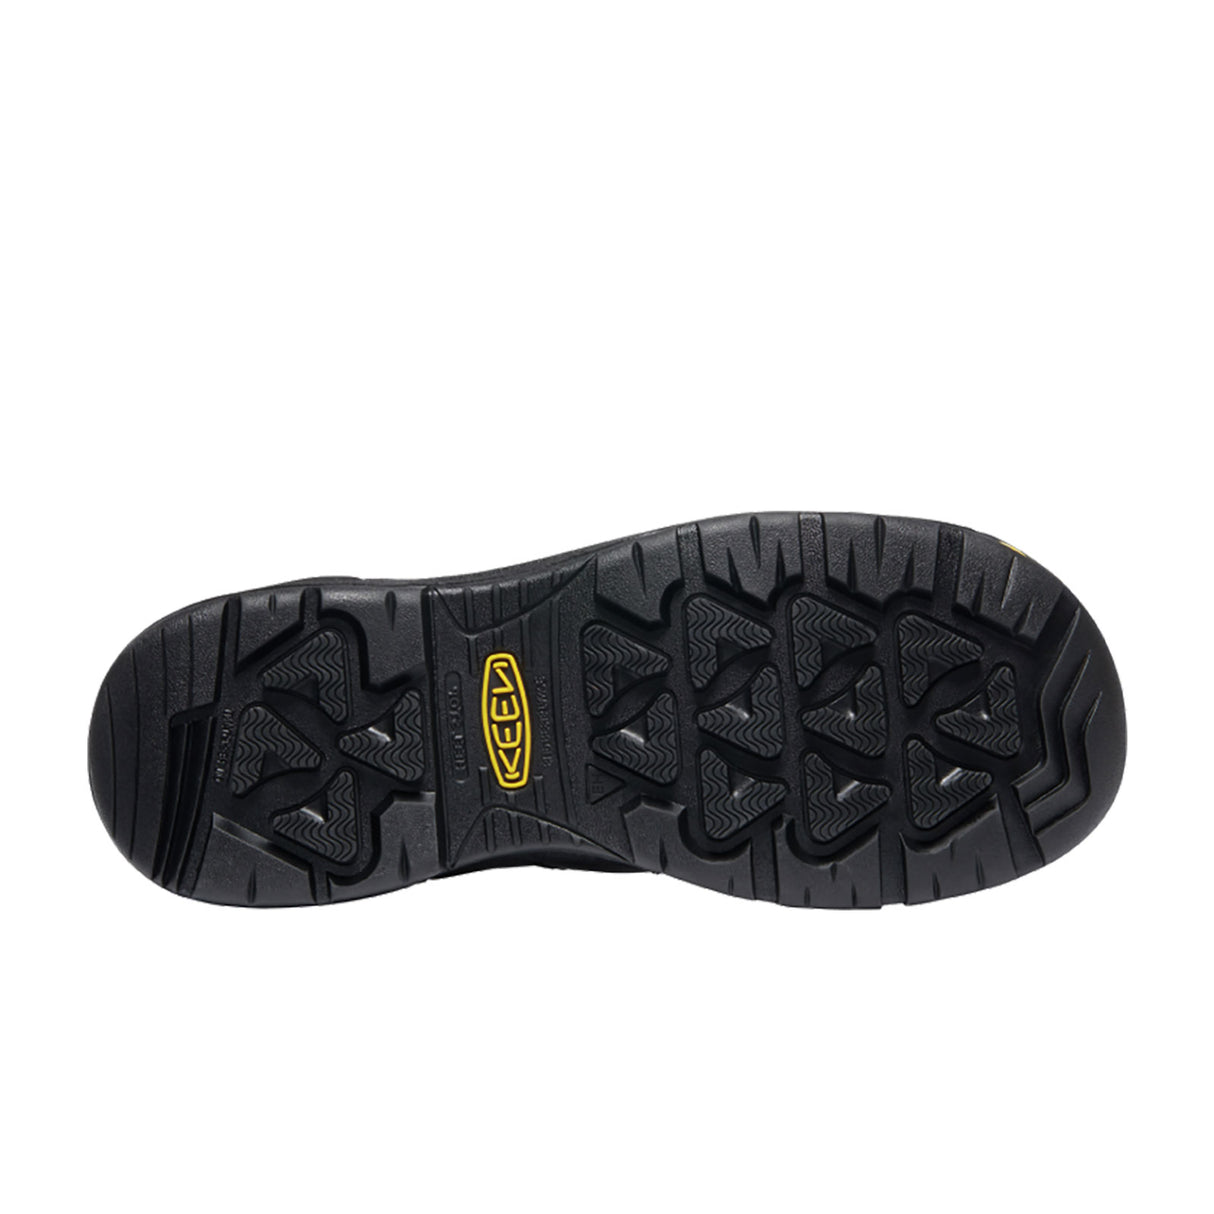 Keen Utility Juneau Romeo Waterproof Carbon Toe Work Boot (Men) - Black/Black Boots - Work - 6" - Carbon Toe - The Heel Shoe Fitters